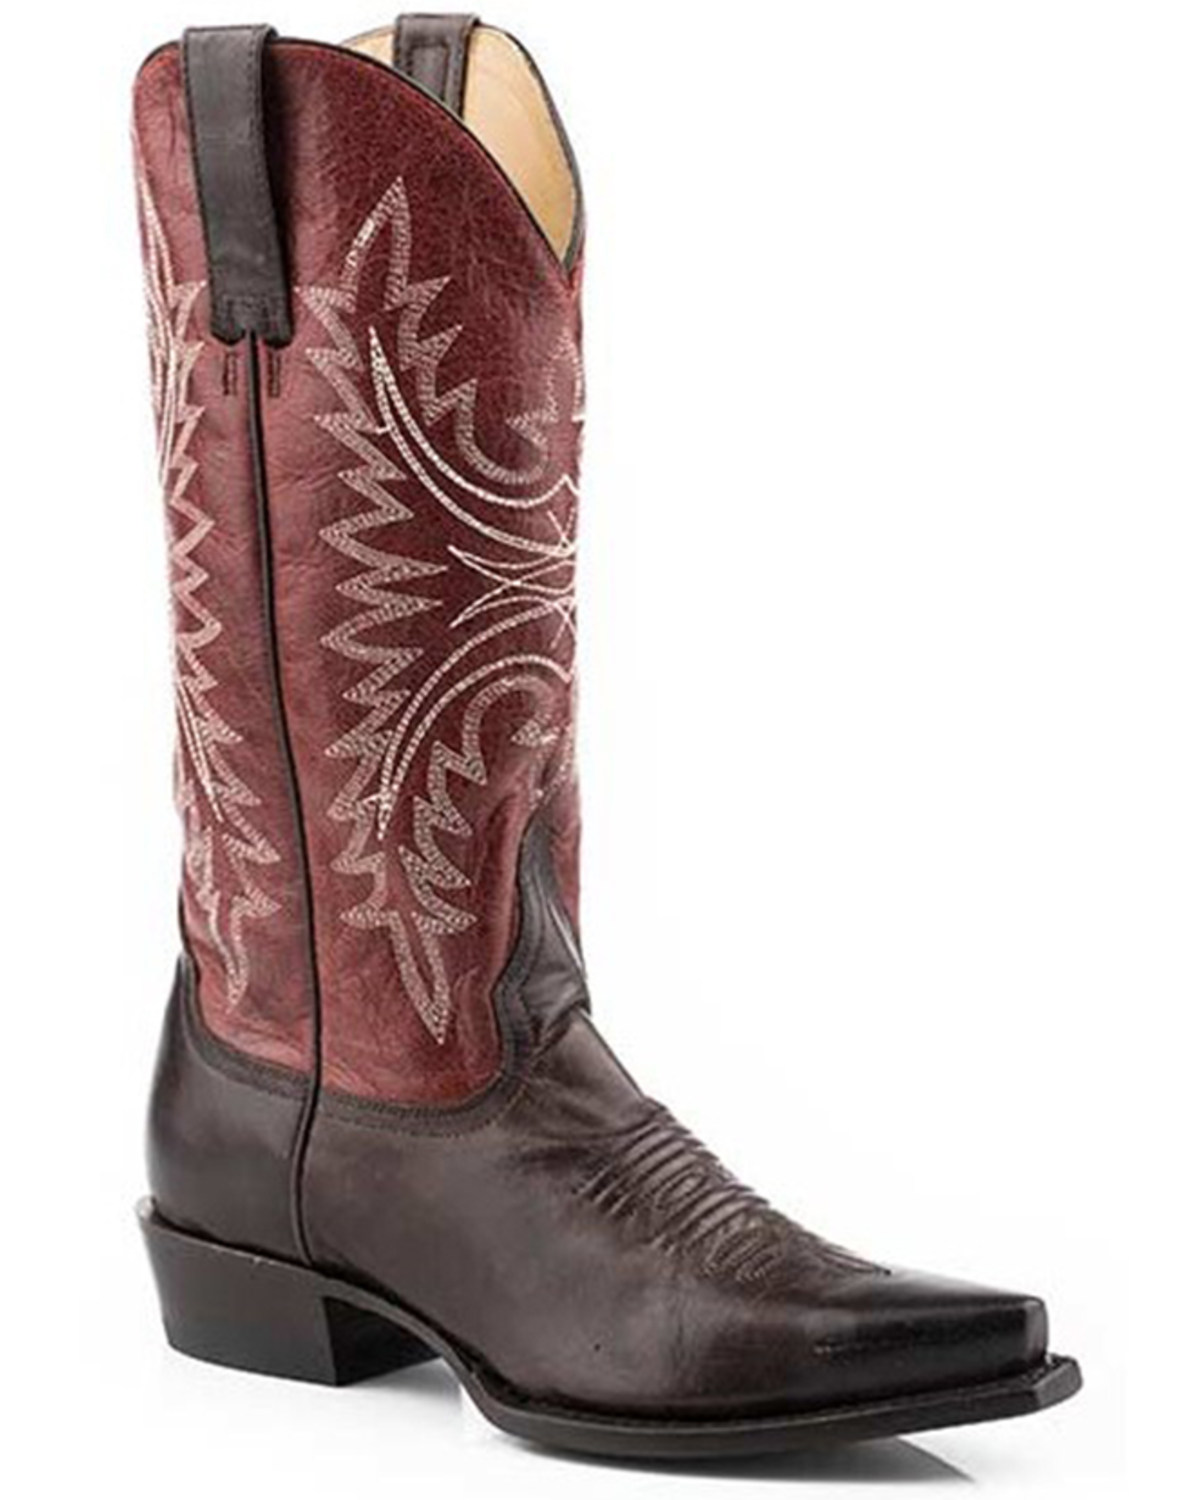 Stetson Women's Freya Western Boots - Snip Toe